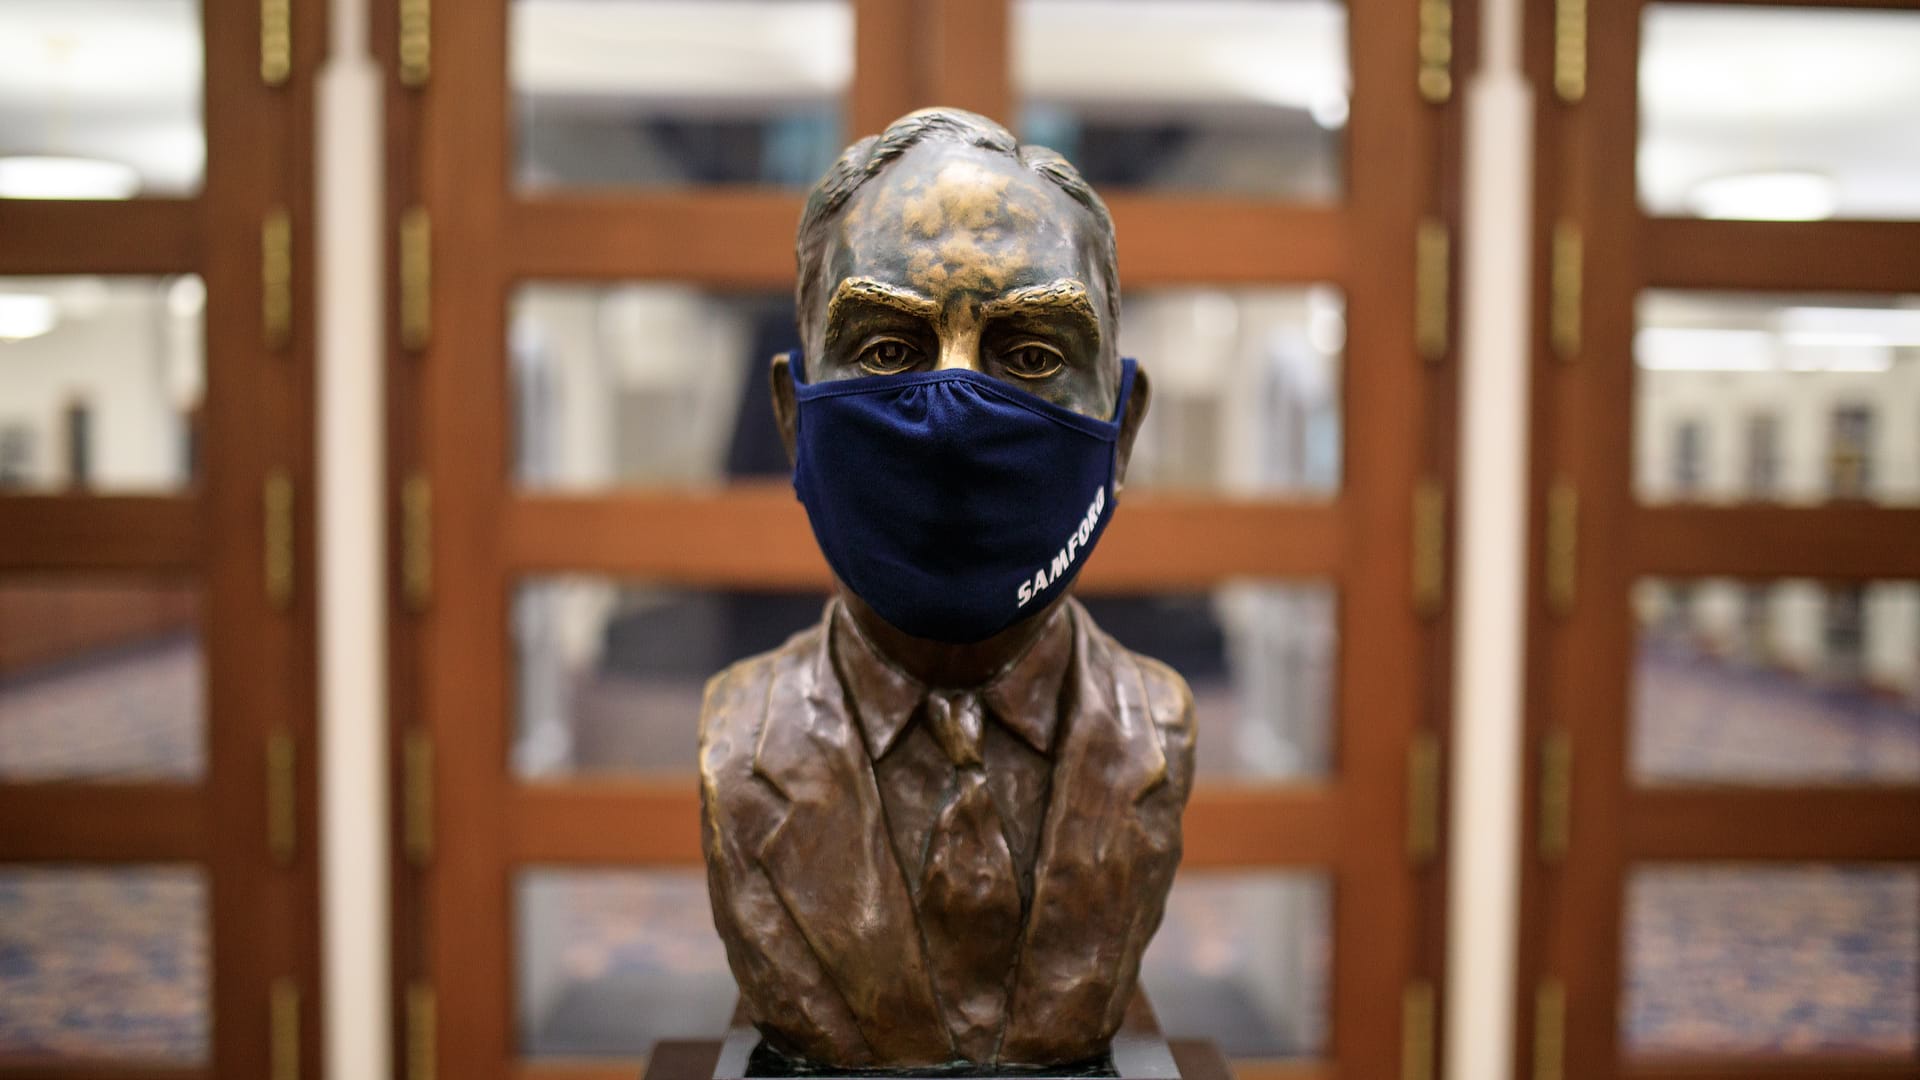 Harwell G. Davis bust in mask